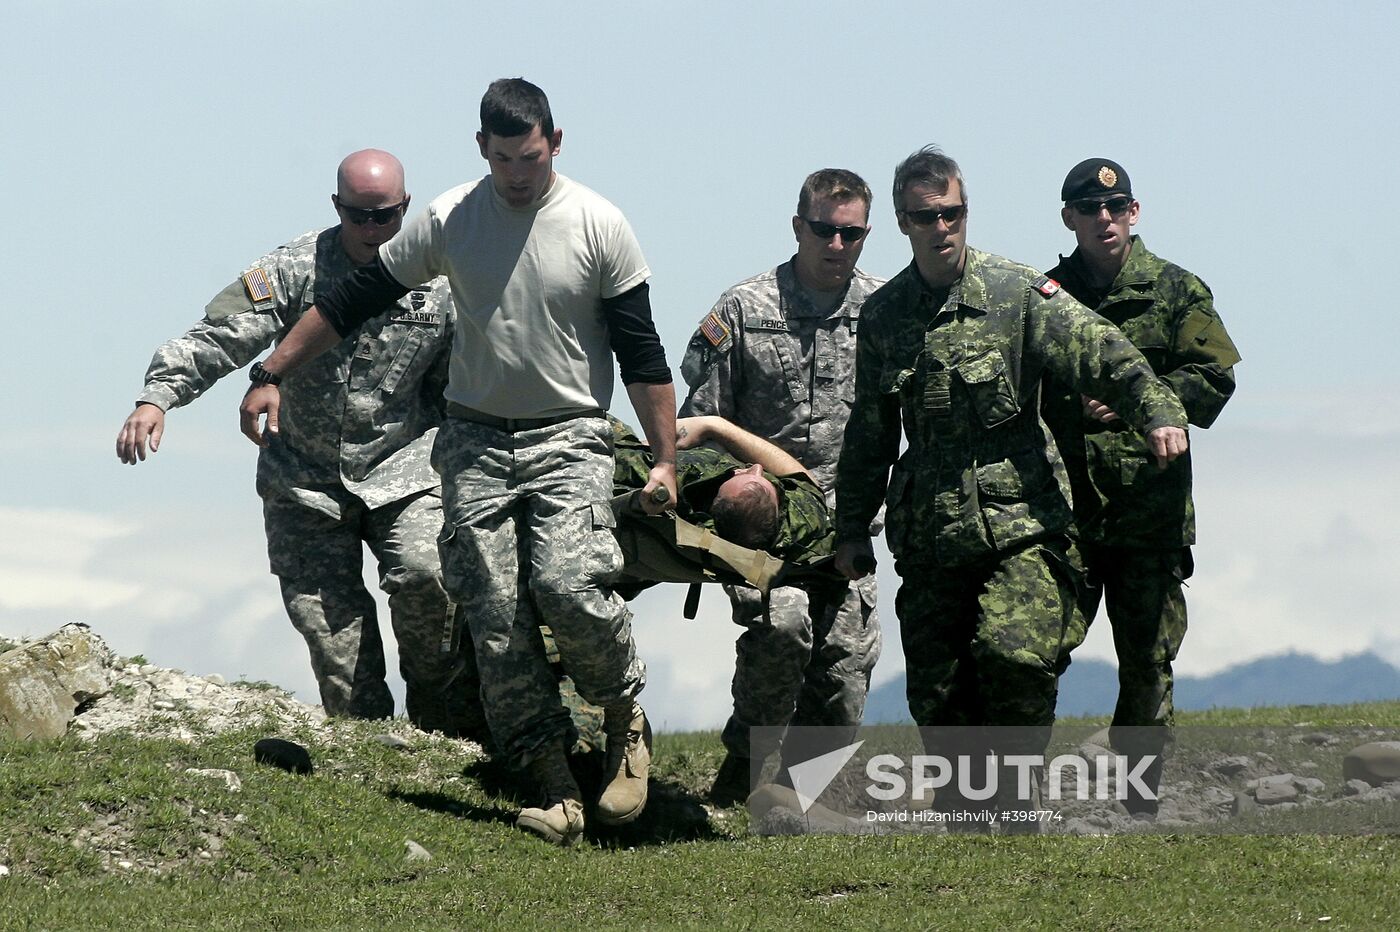 NATO exercise Cooperative Longbow 2009 nears end in Georgia